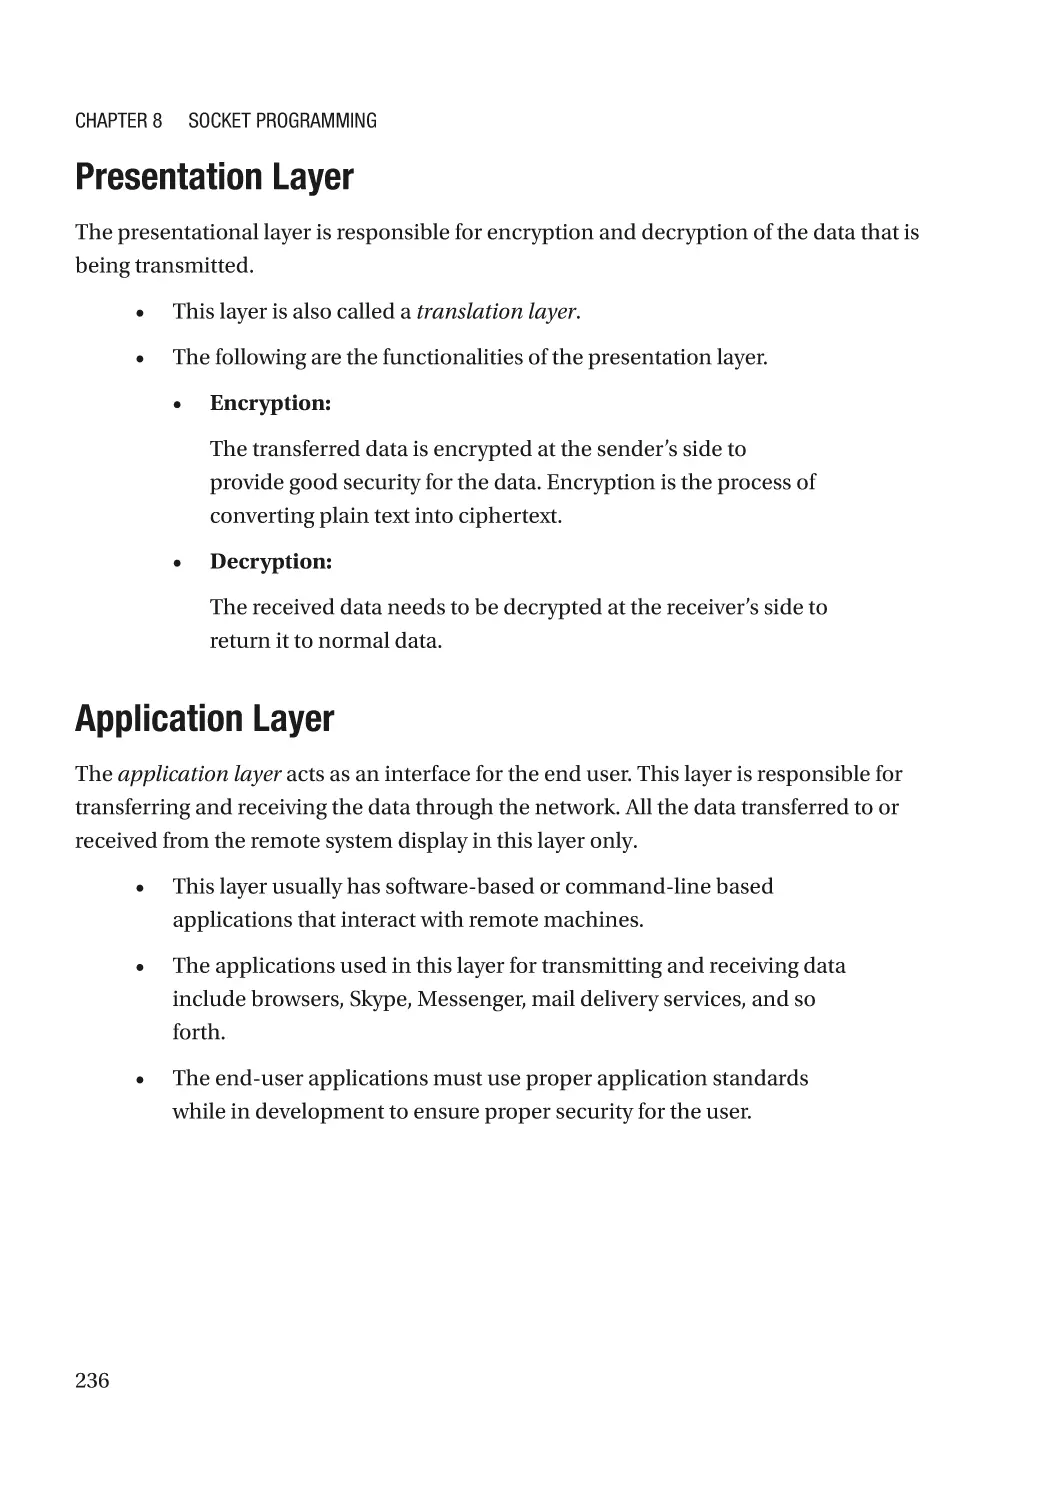 Presentation Layer
Application Layer